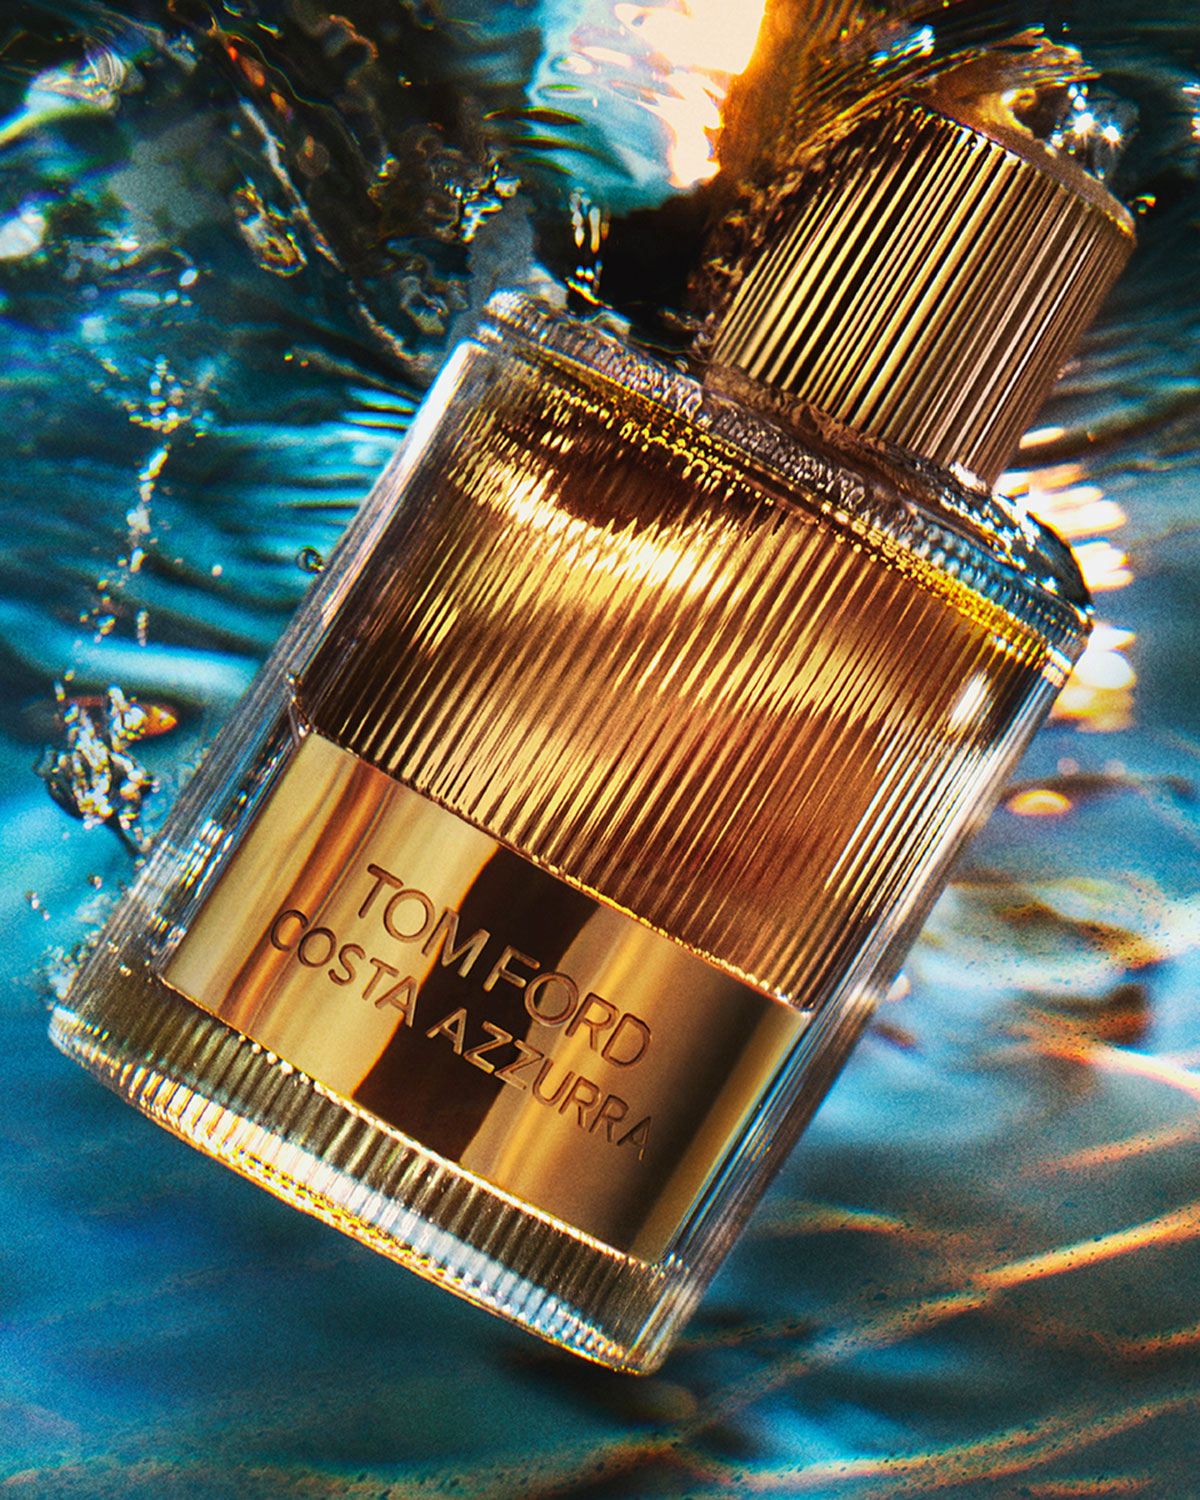 Tom Ford Costa Azzurra Signature Perfume Ad 2021